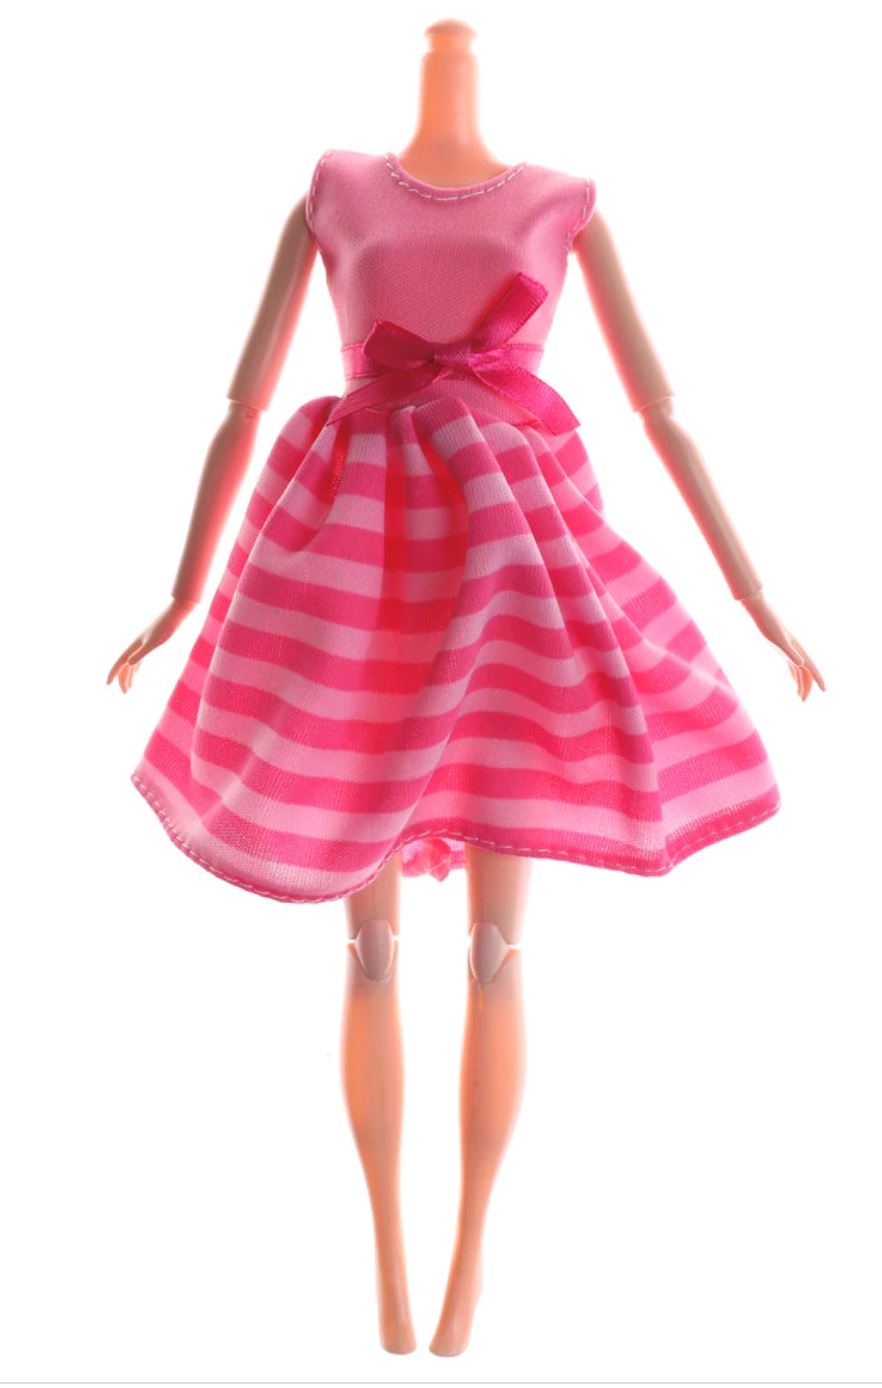 Fashion Doll Skater Dress My Moppet Shop Pink 